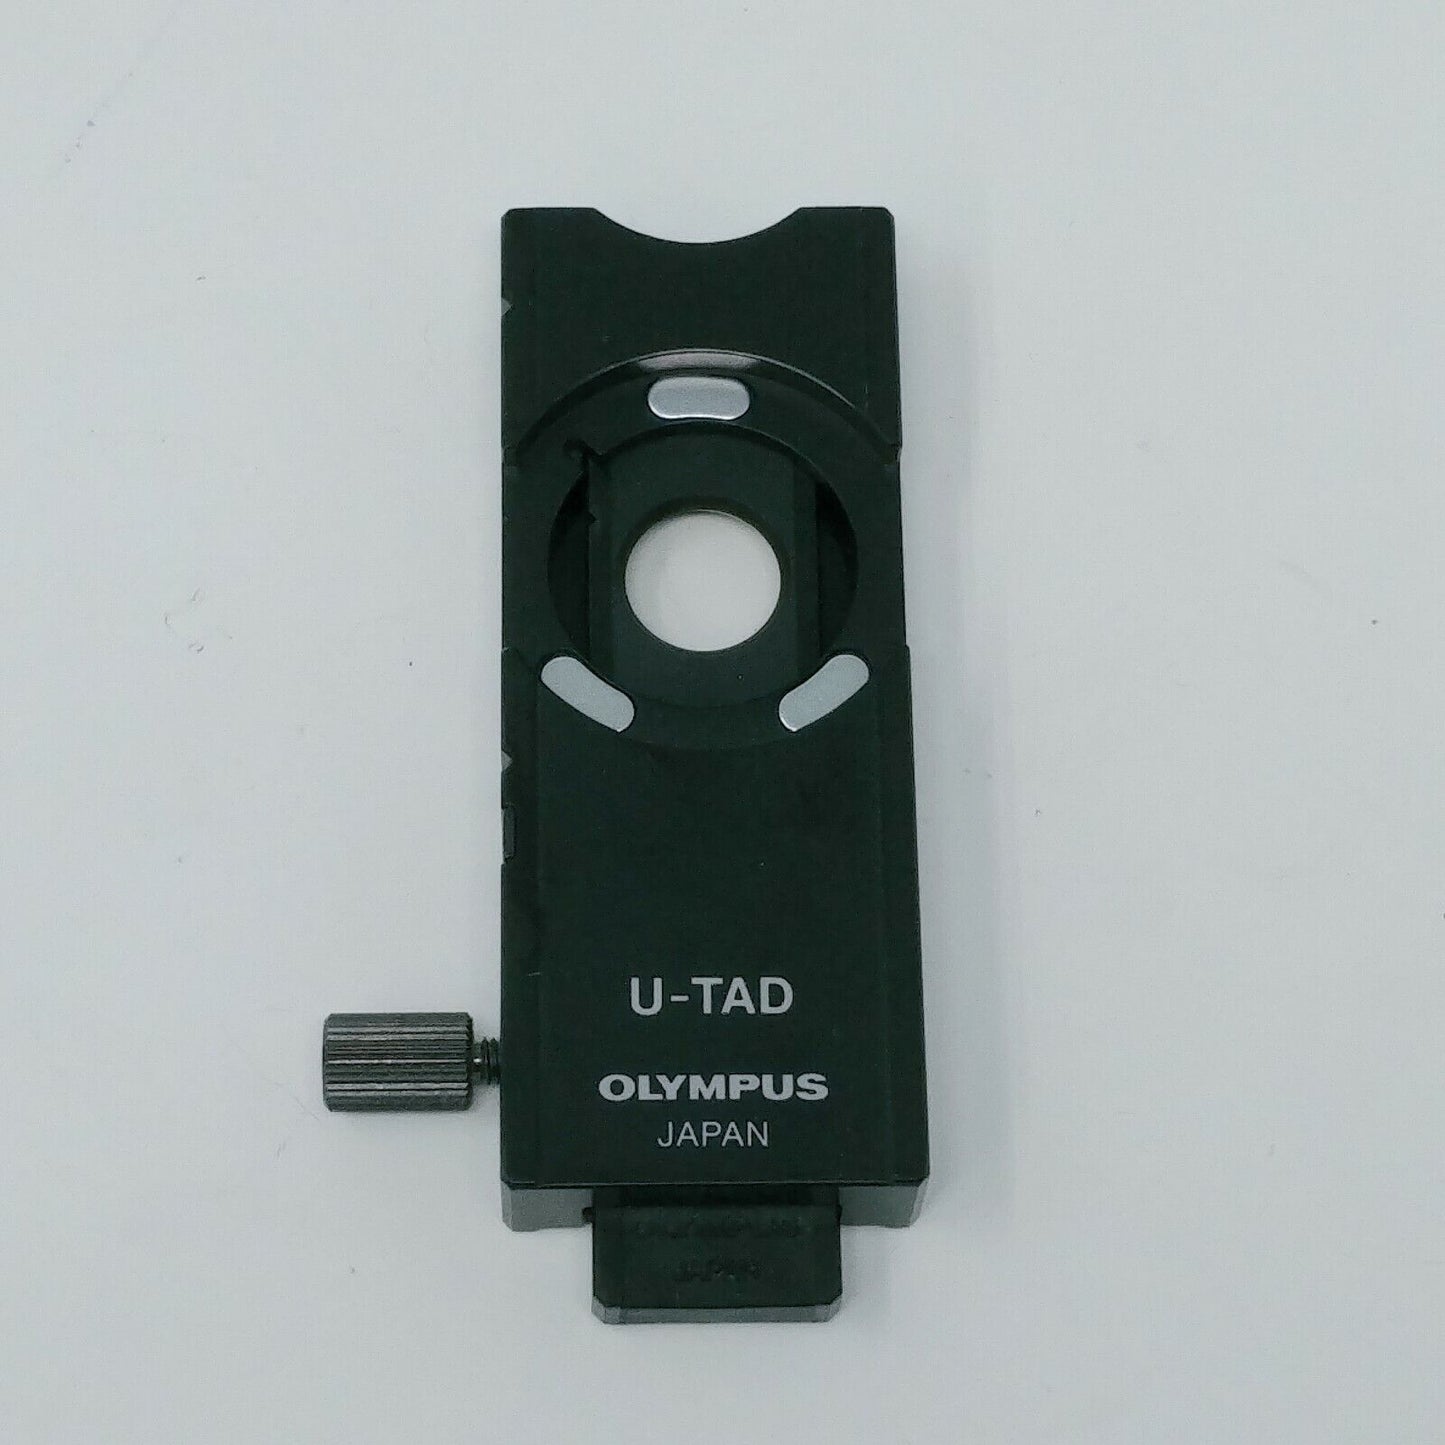 Olympus Microscope U-TAD Compensator Adapter and U-TP137 Quarter Wave Plate - microscopemarketplace